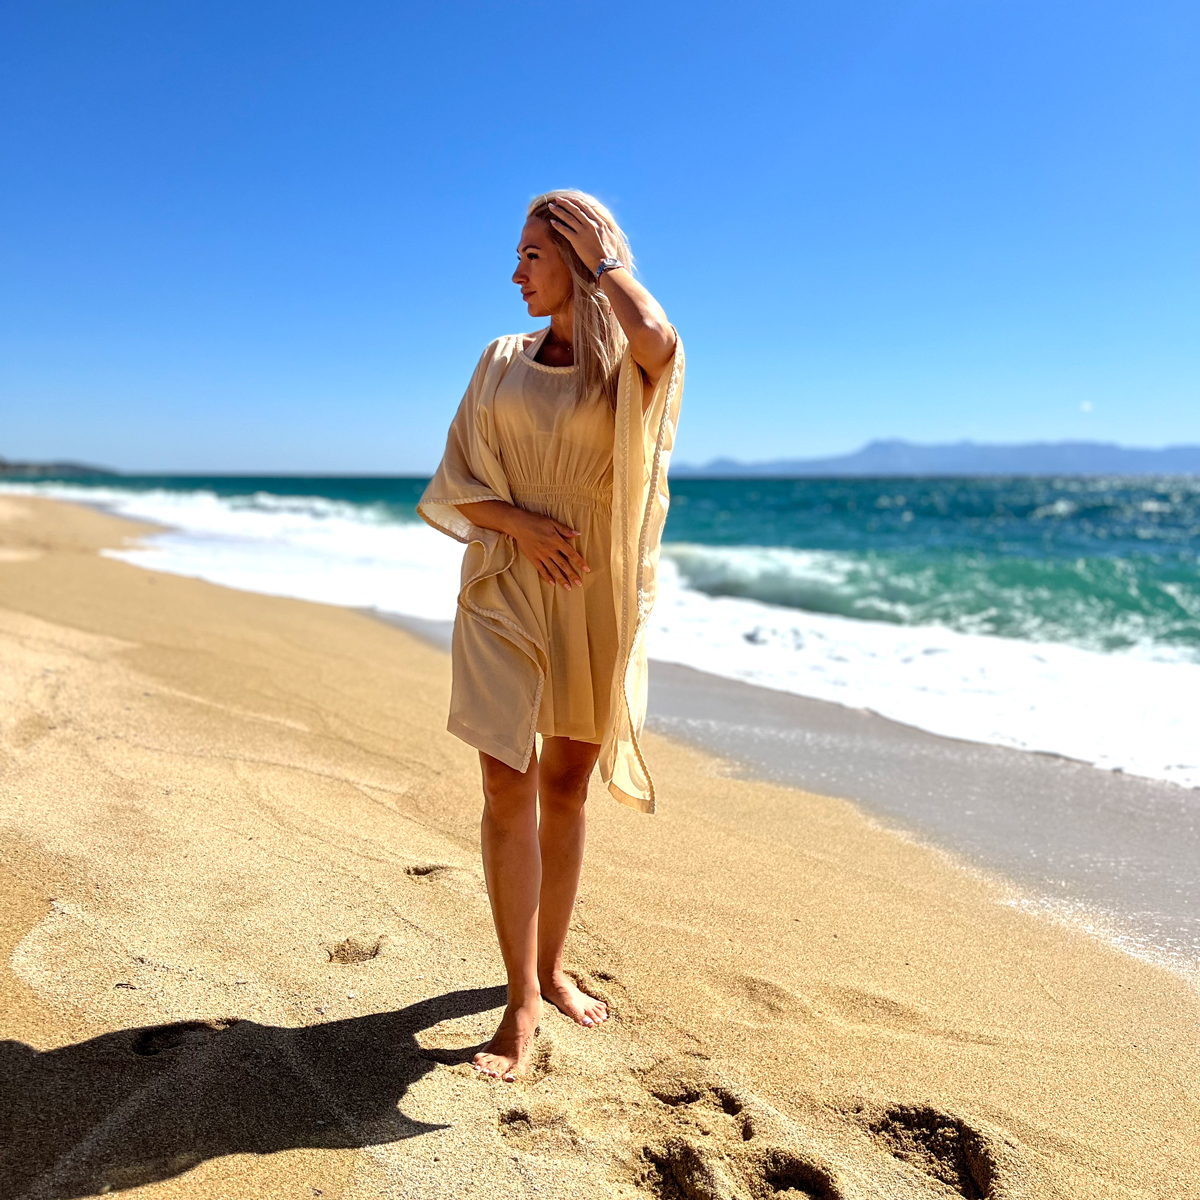 A girl at a beach with beige beach robe from Aira Fashion